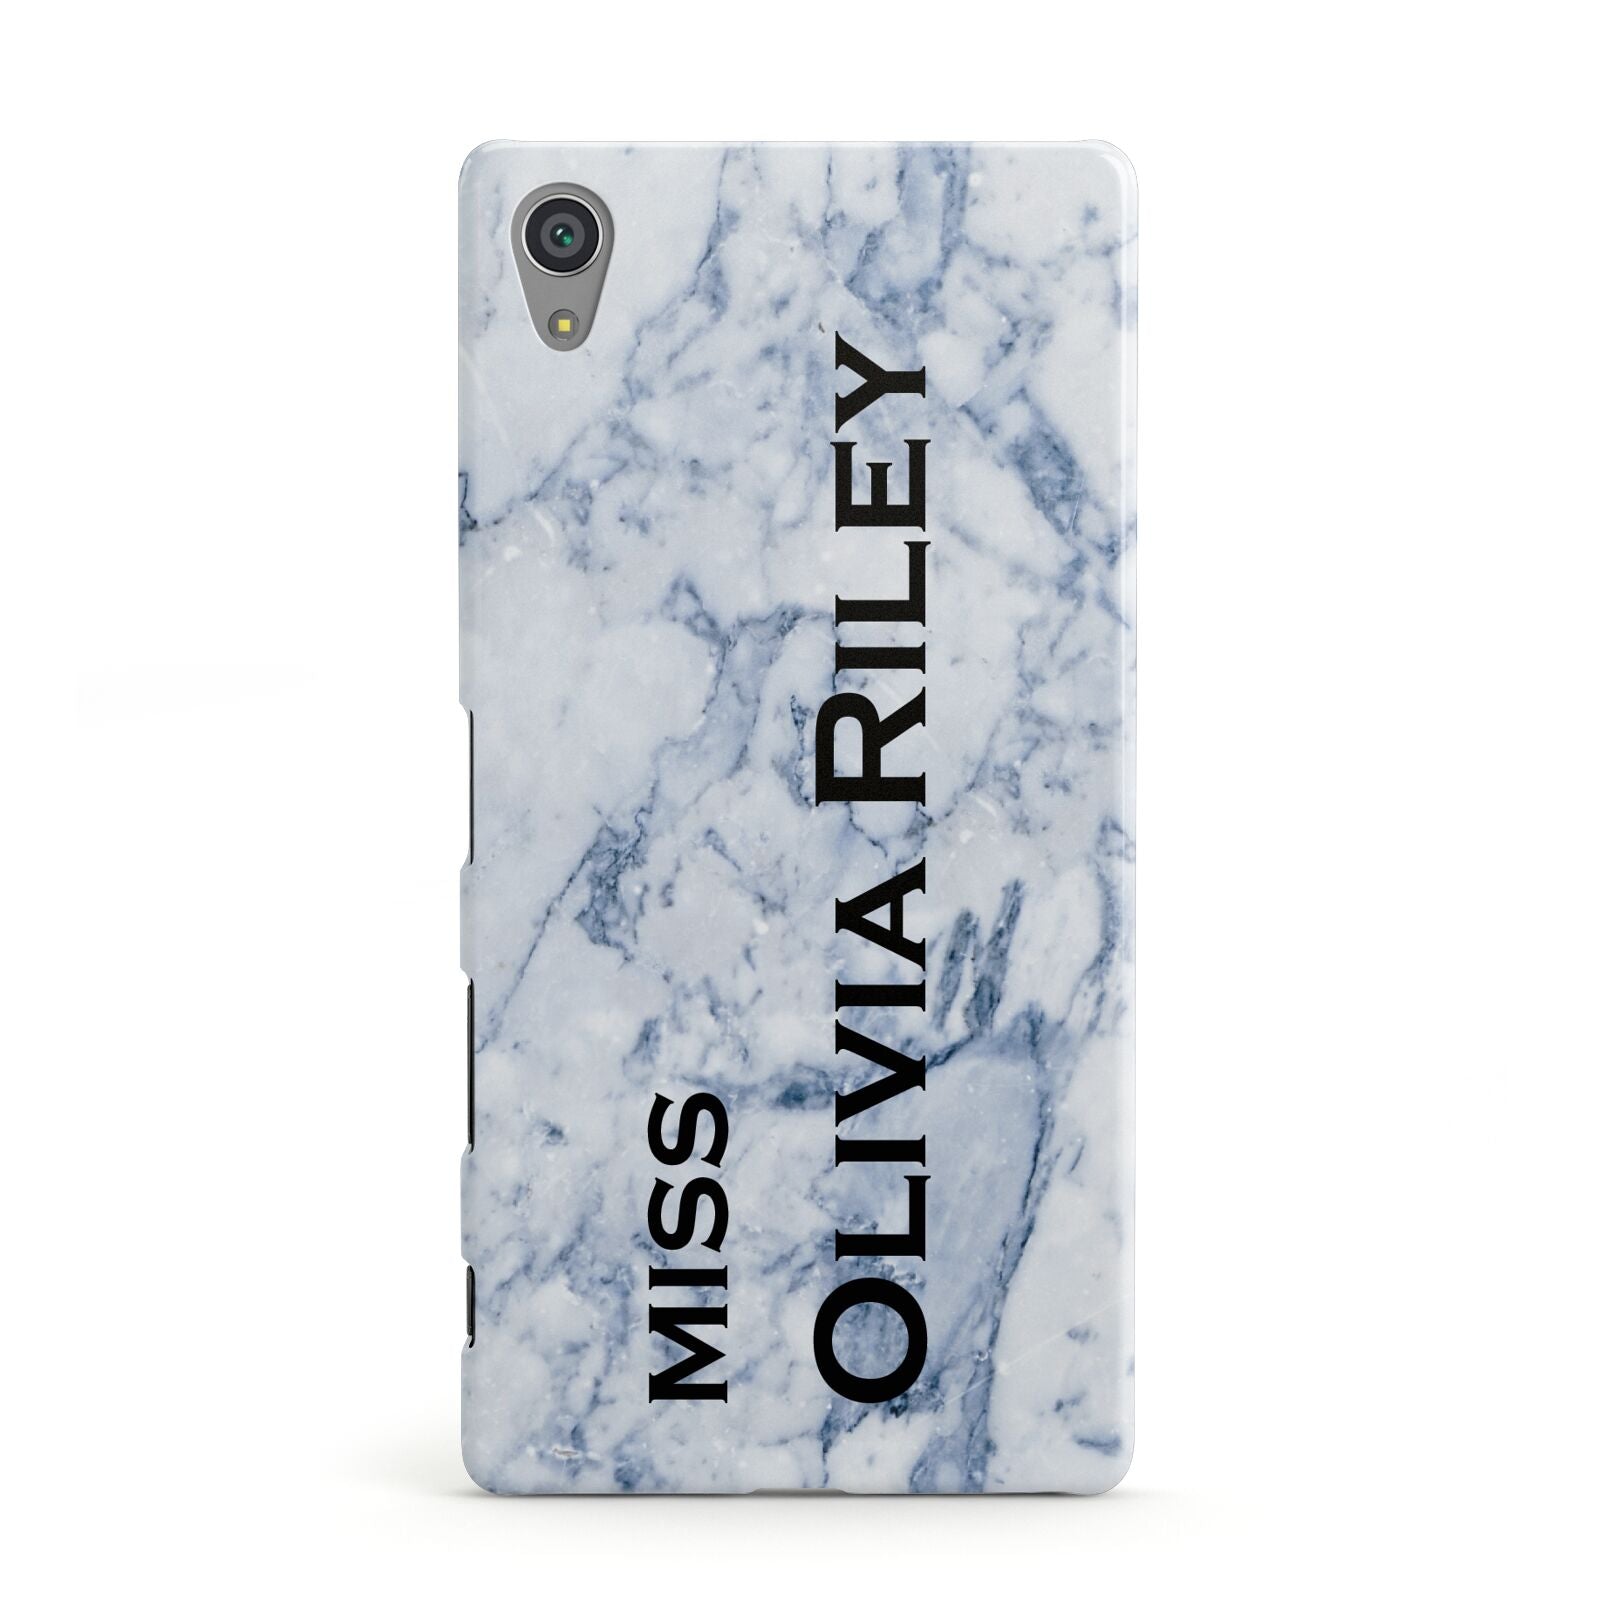 Full Name Grey Marble Sony Xperia Case